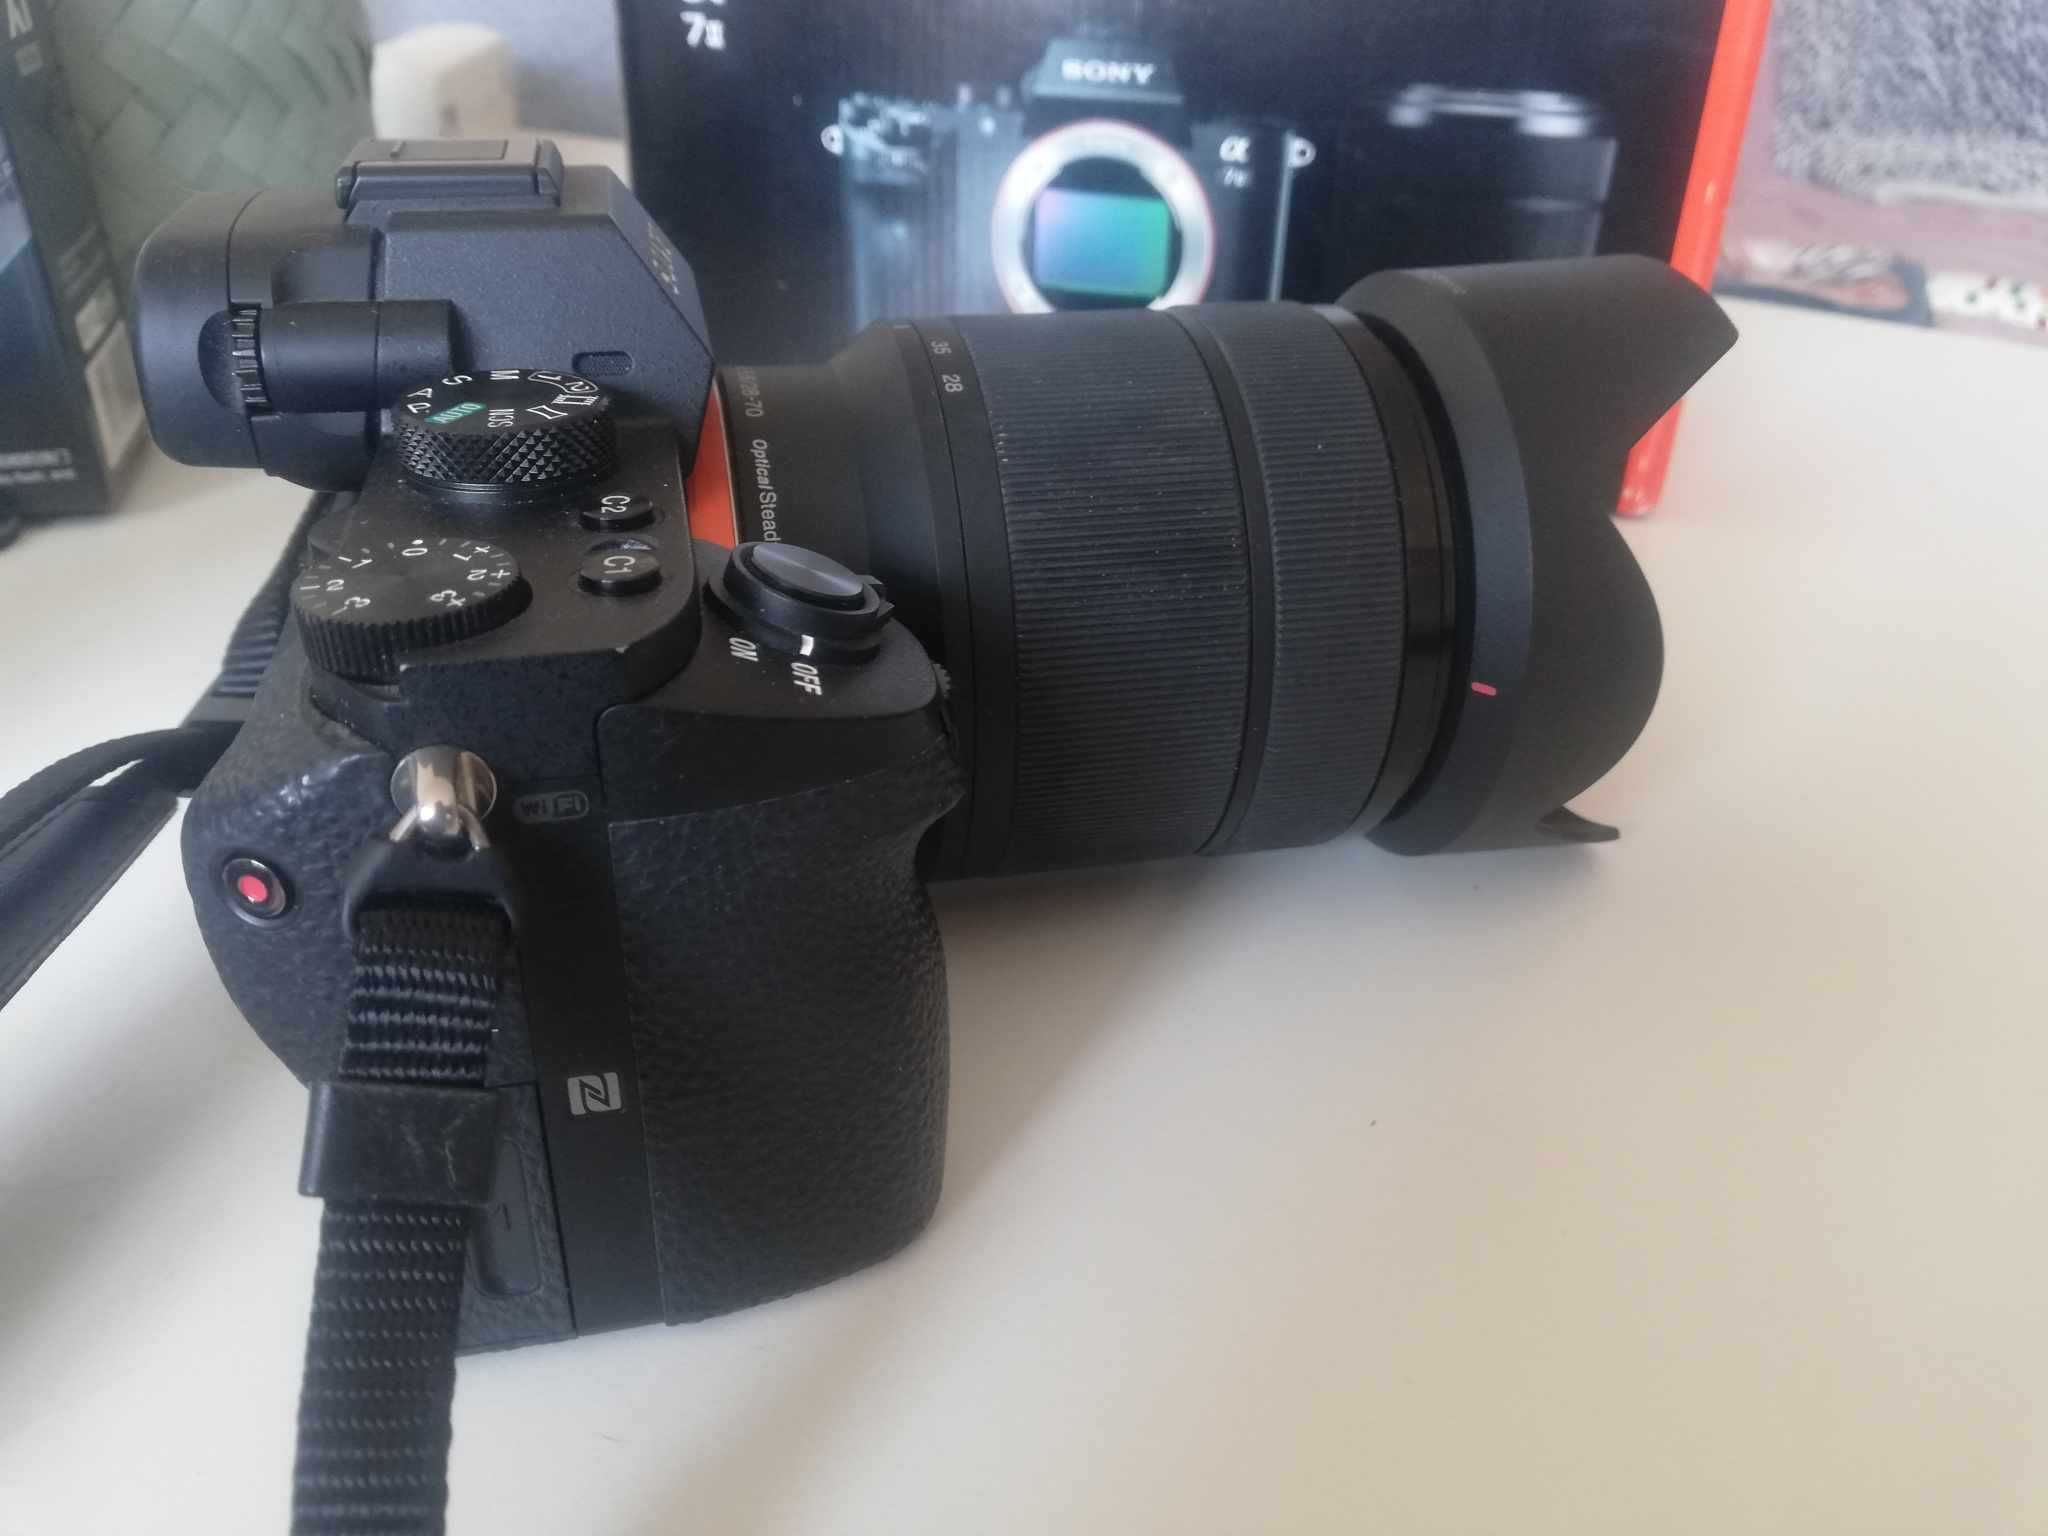 Фотоапарат Sony Alpha A7 II Kit (FE 28-70mm f/3.5-5.6 OSS)